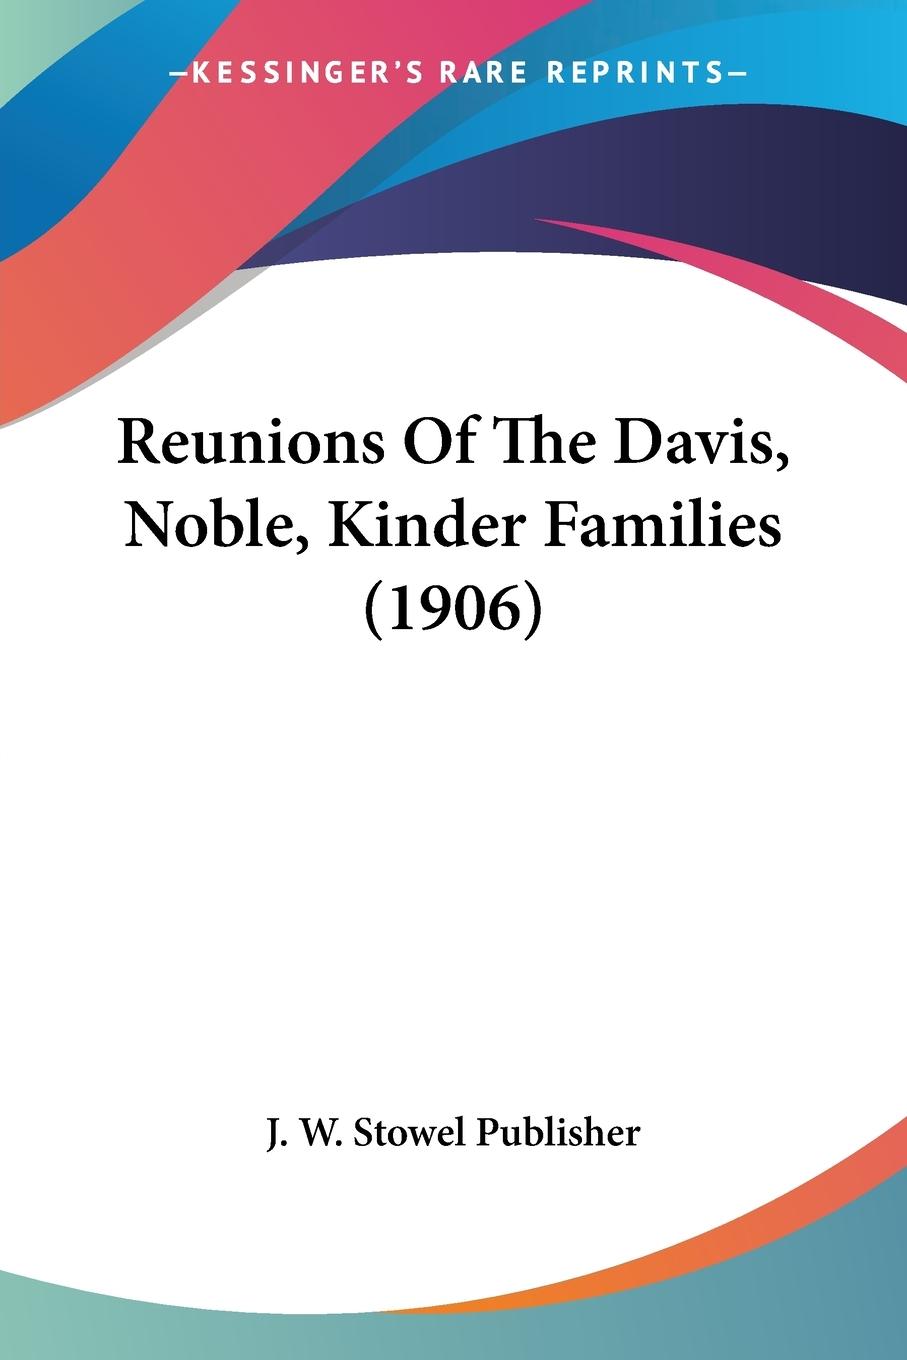 Reunions Of The Davis, Noble, Kinder Families (1906) - J. W. Stowel Publisher